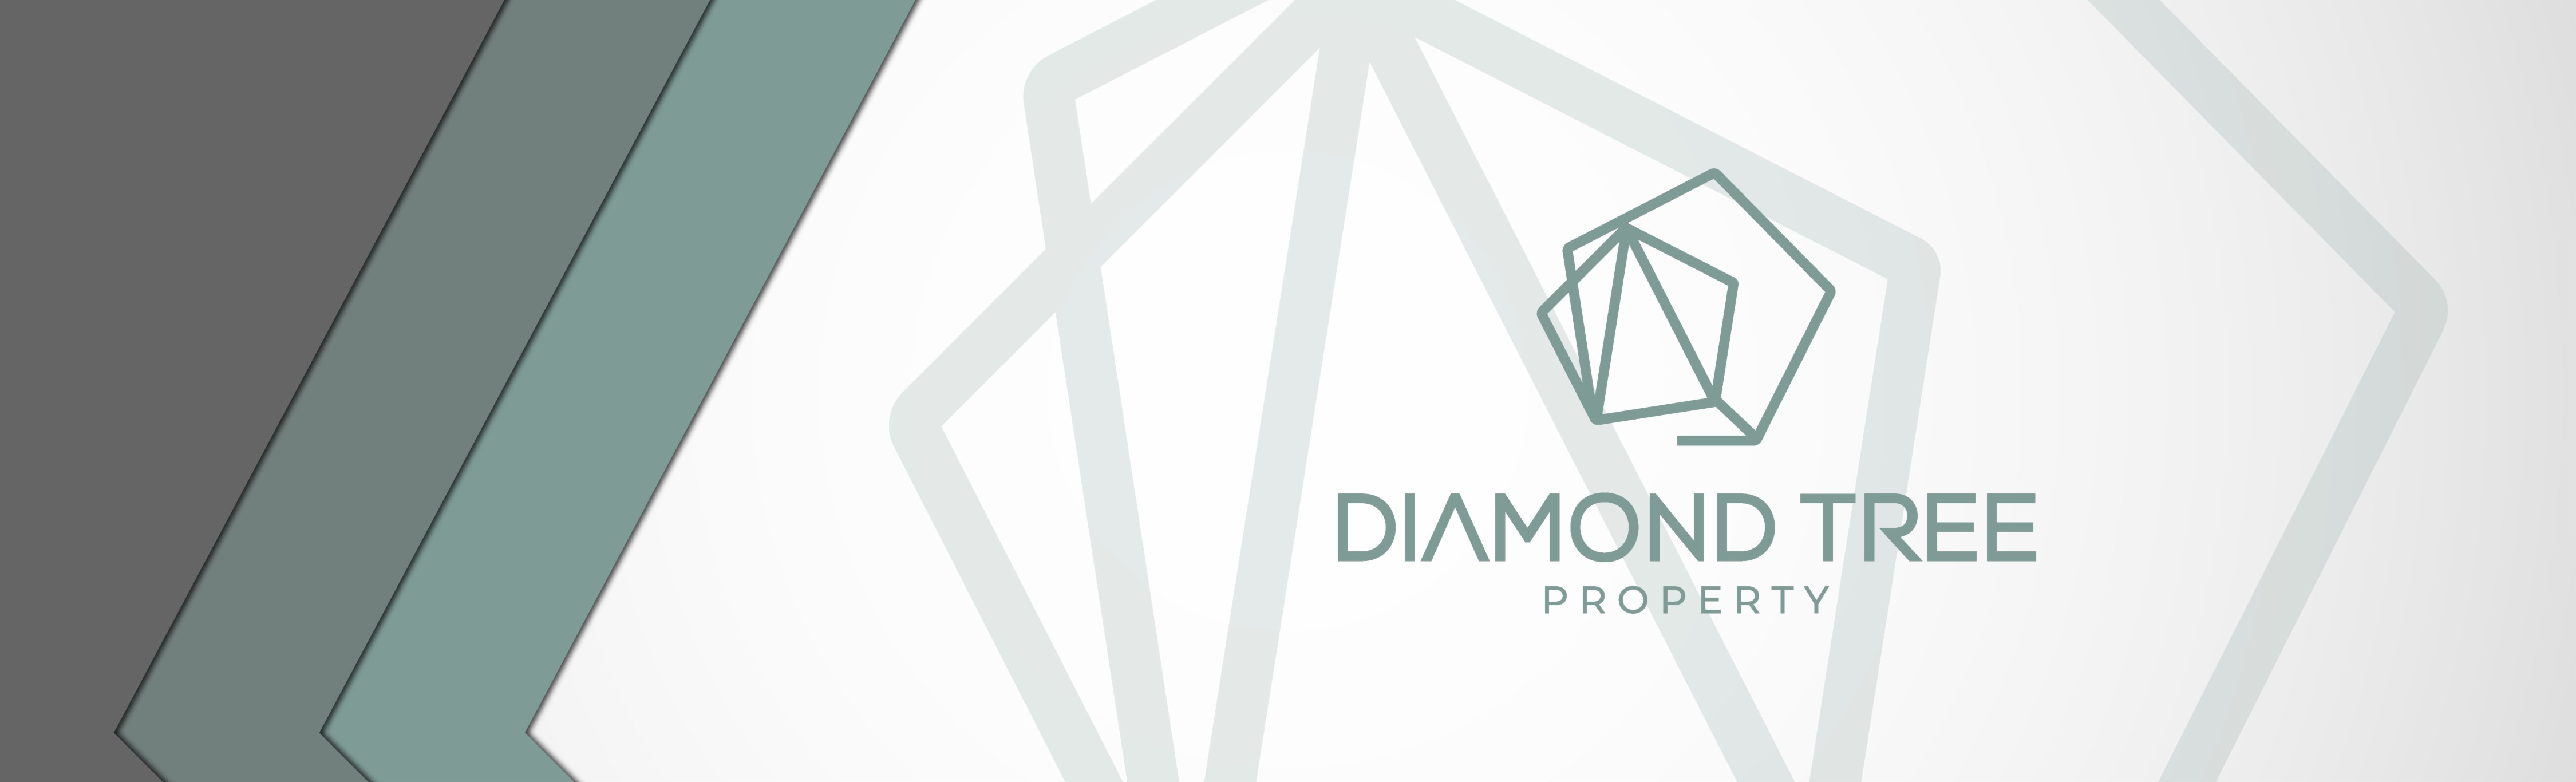 Diamond Tree Property logo